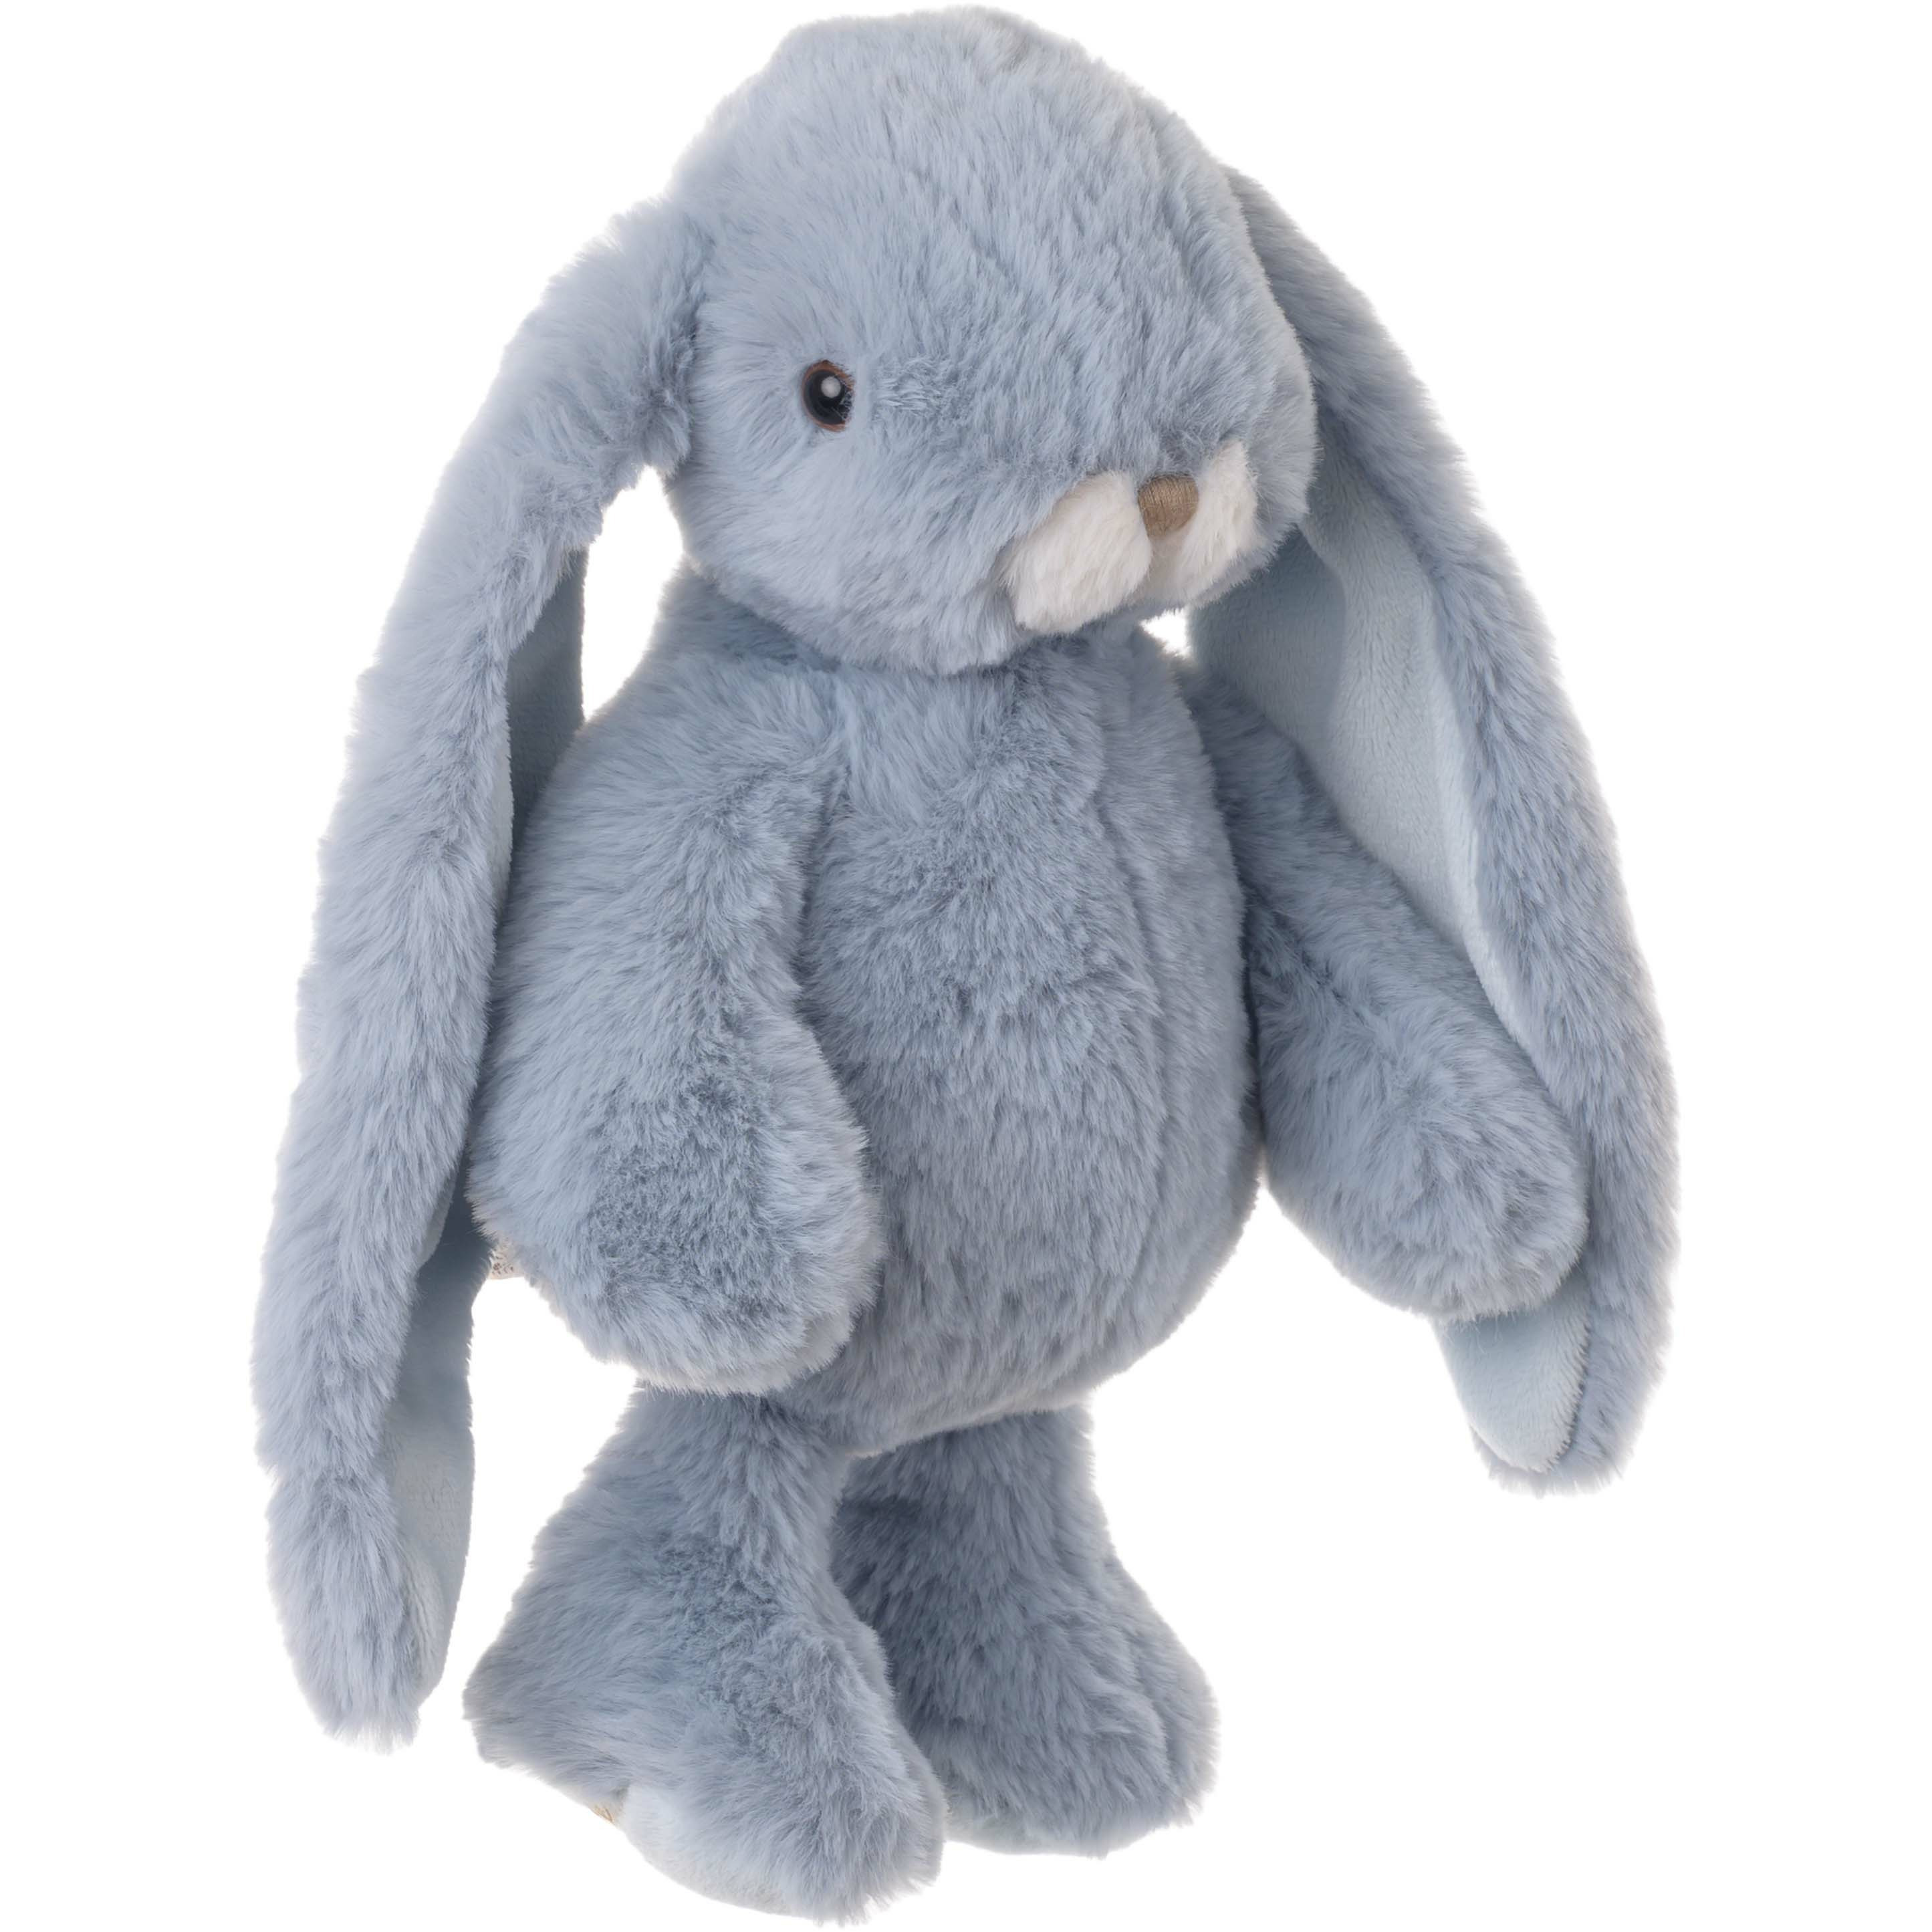 Bukowski pluche konijn knuffeldier lichtblauw staand 30 cm luxe knuffels